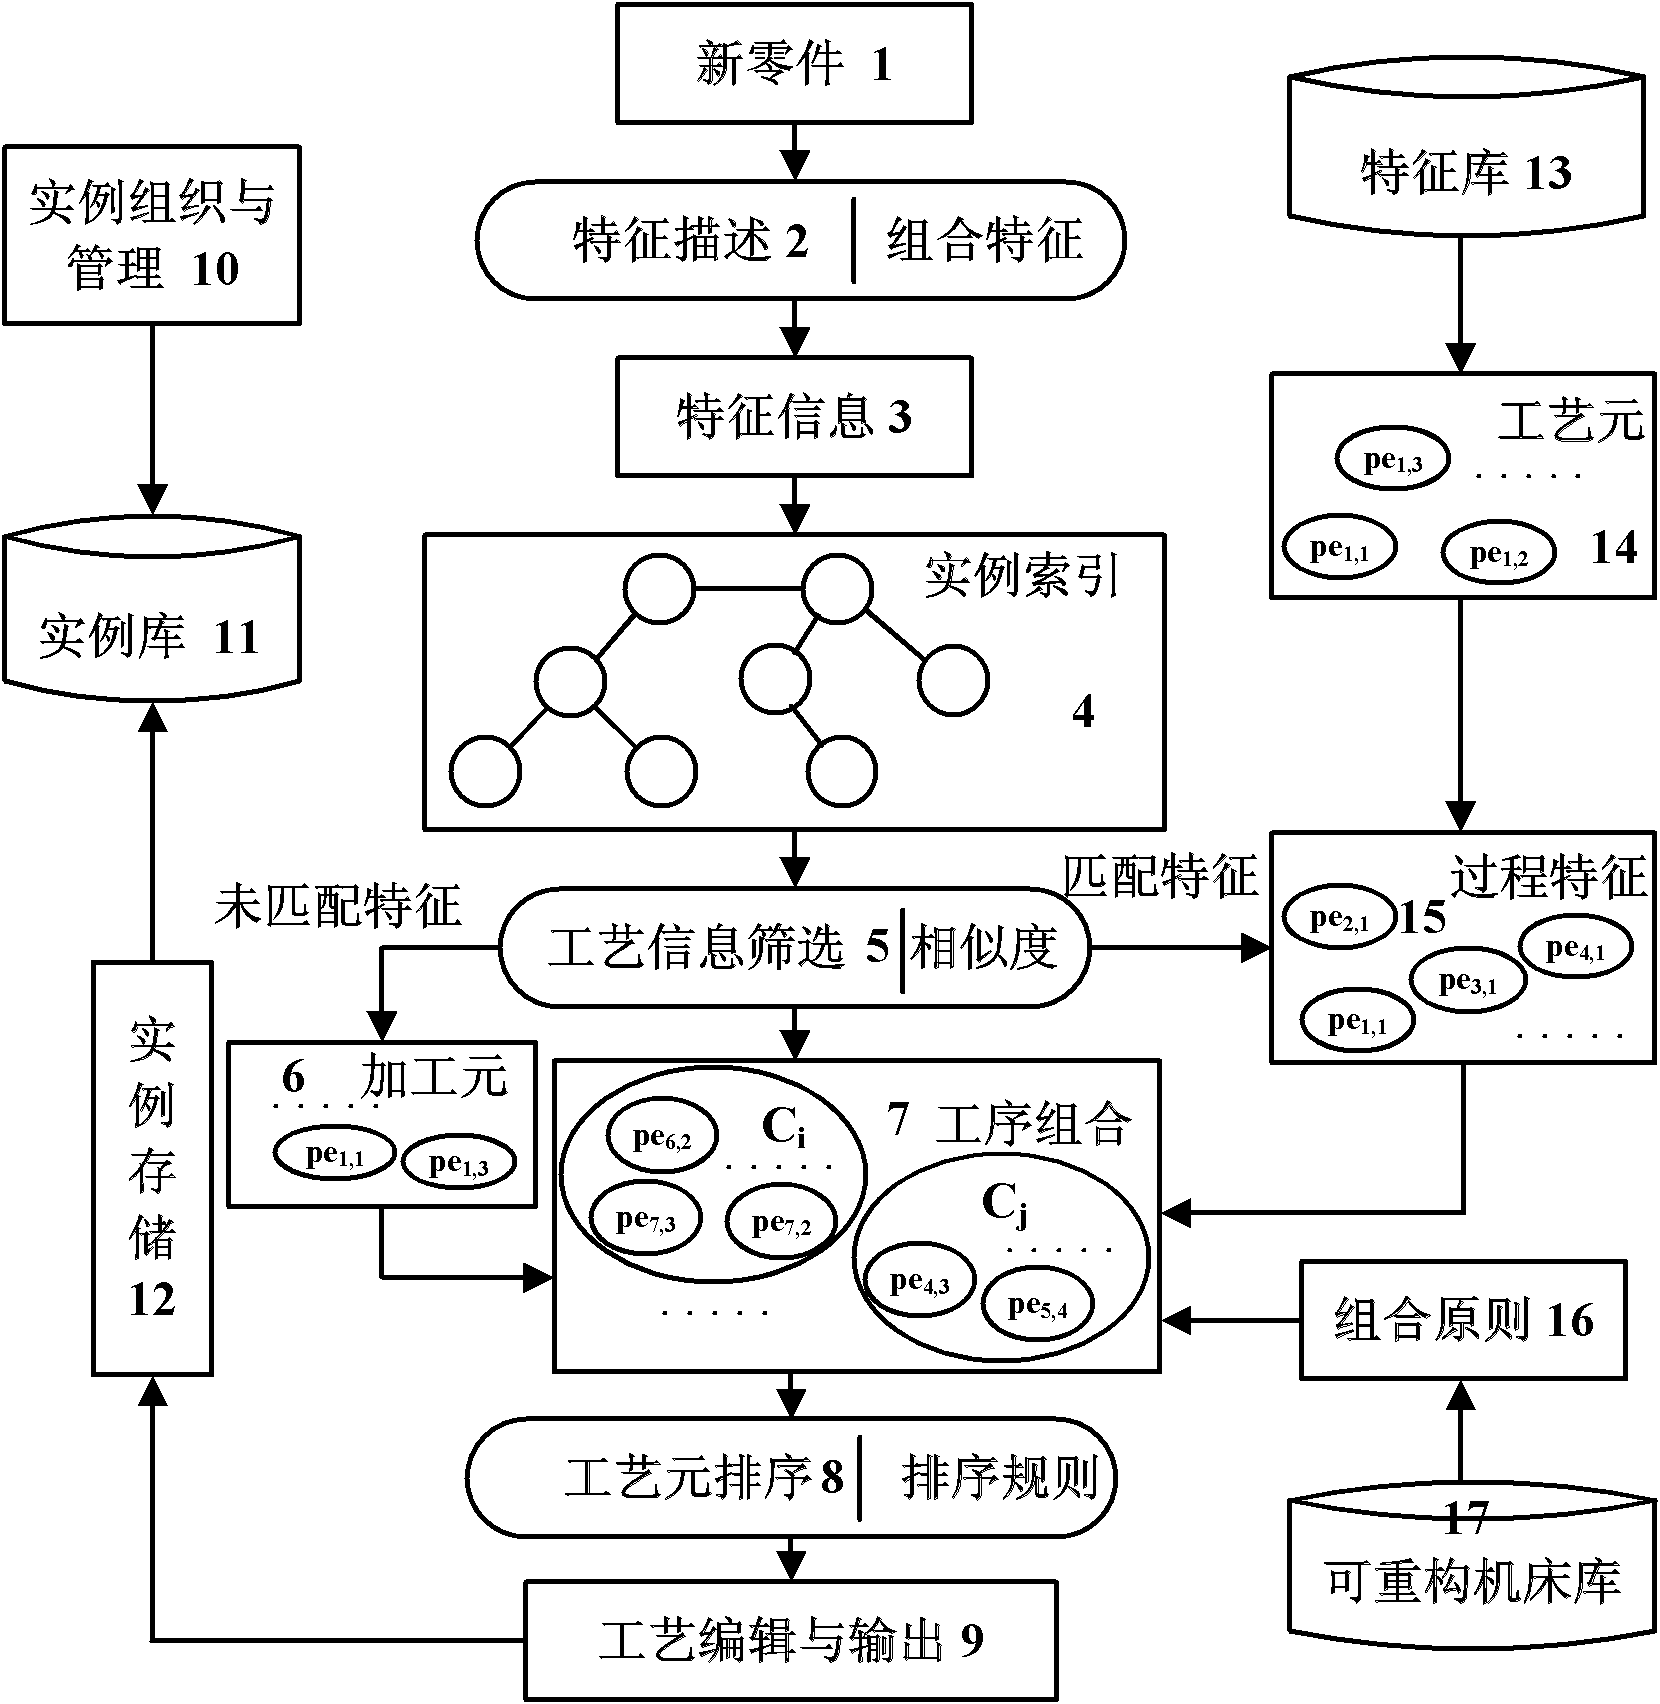 Process planning method based on similarity theory